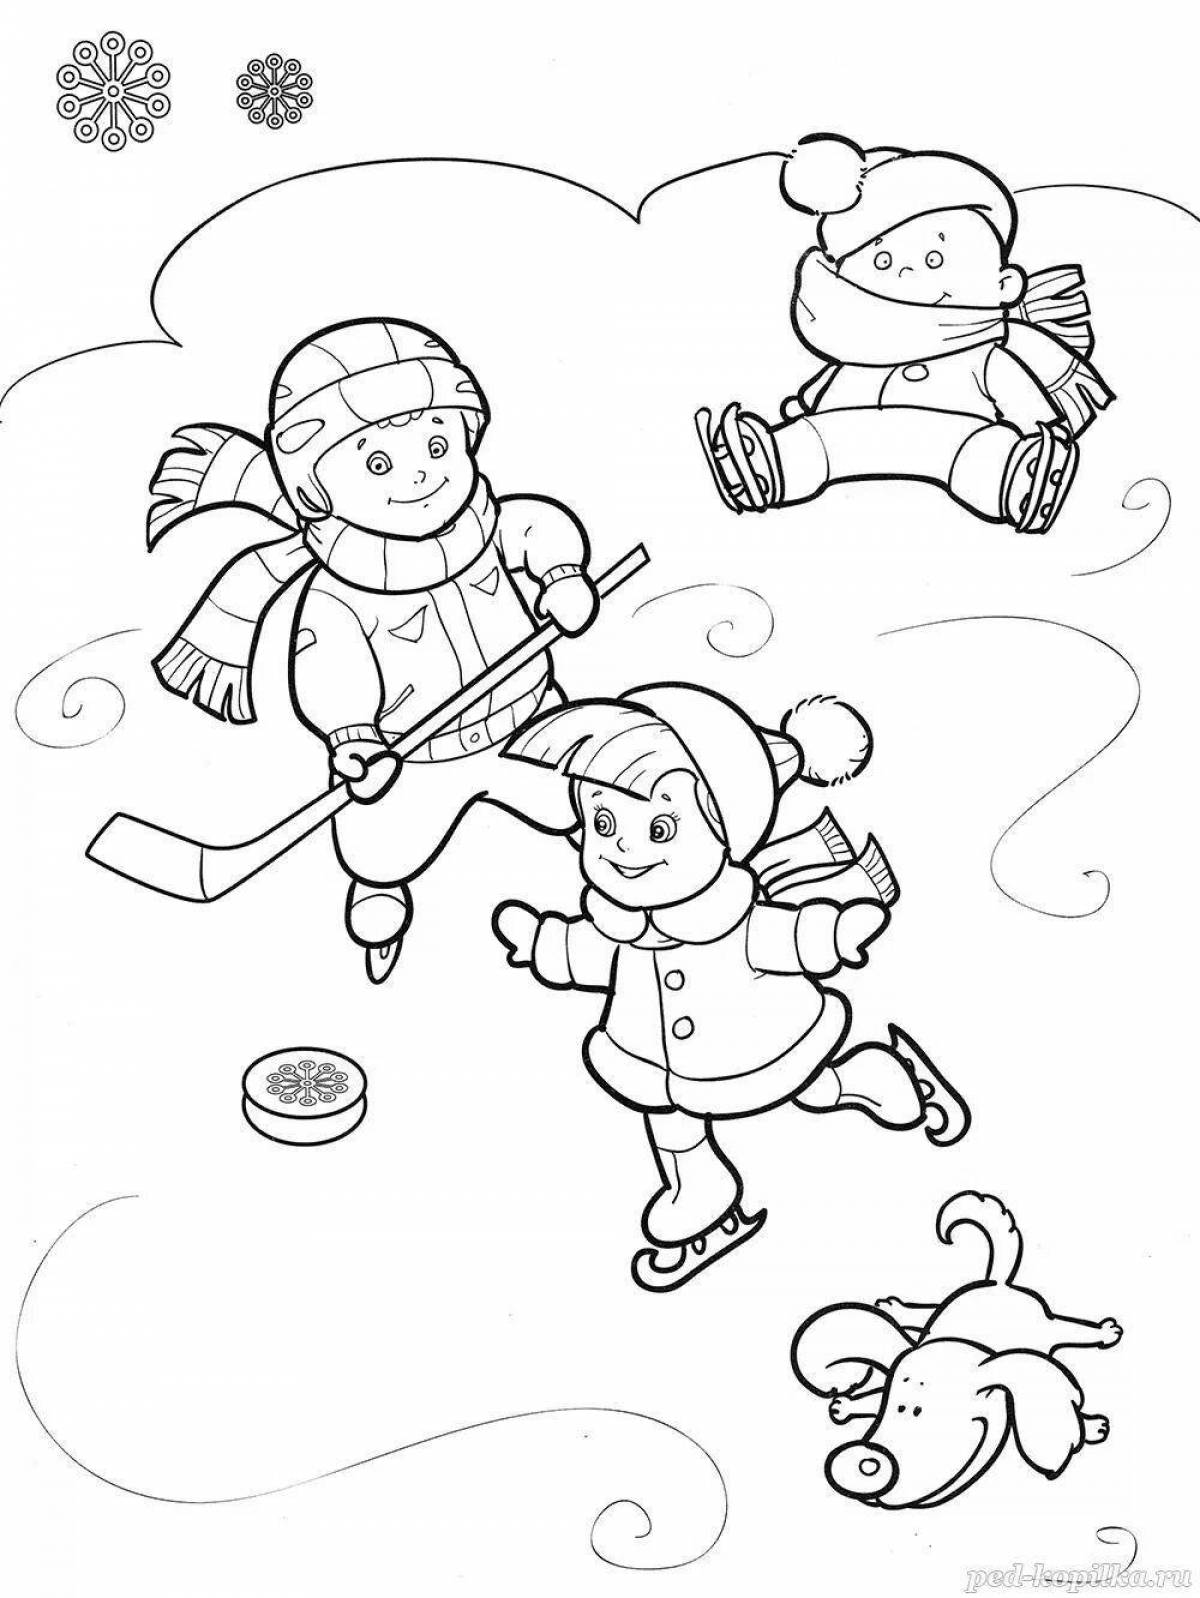 Joyful coloring winter games